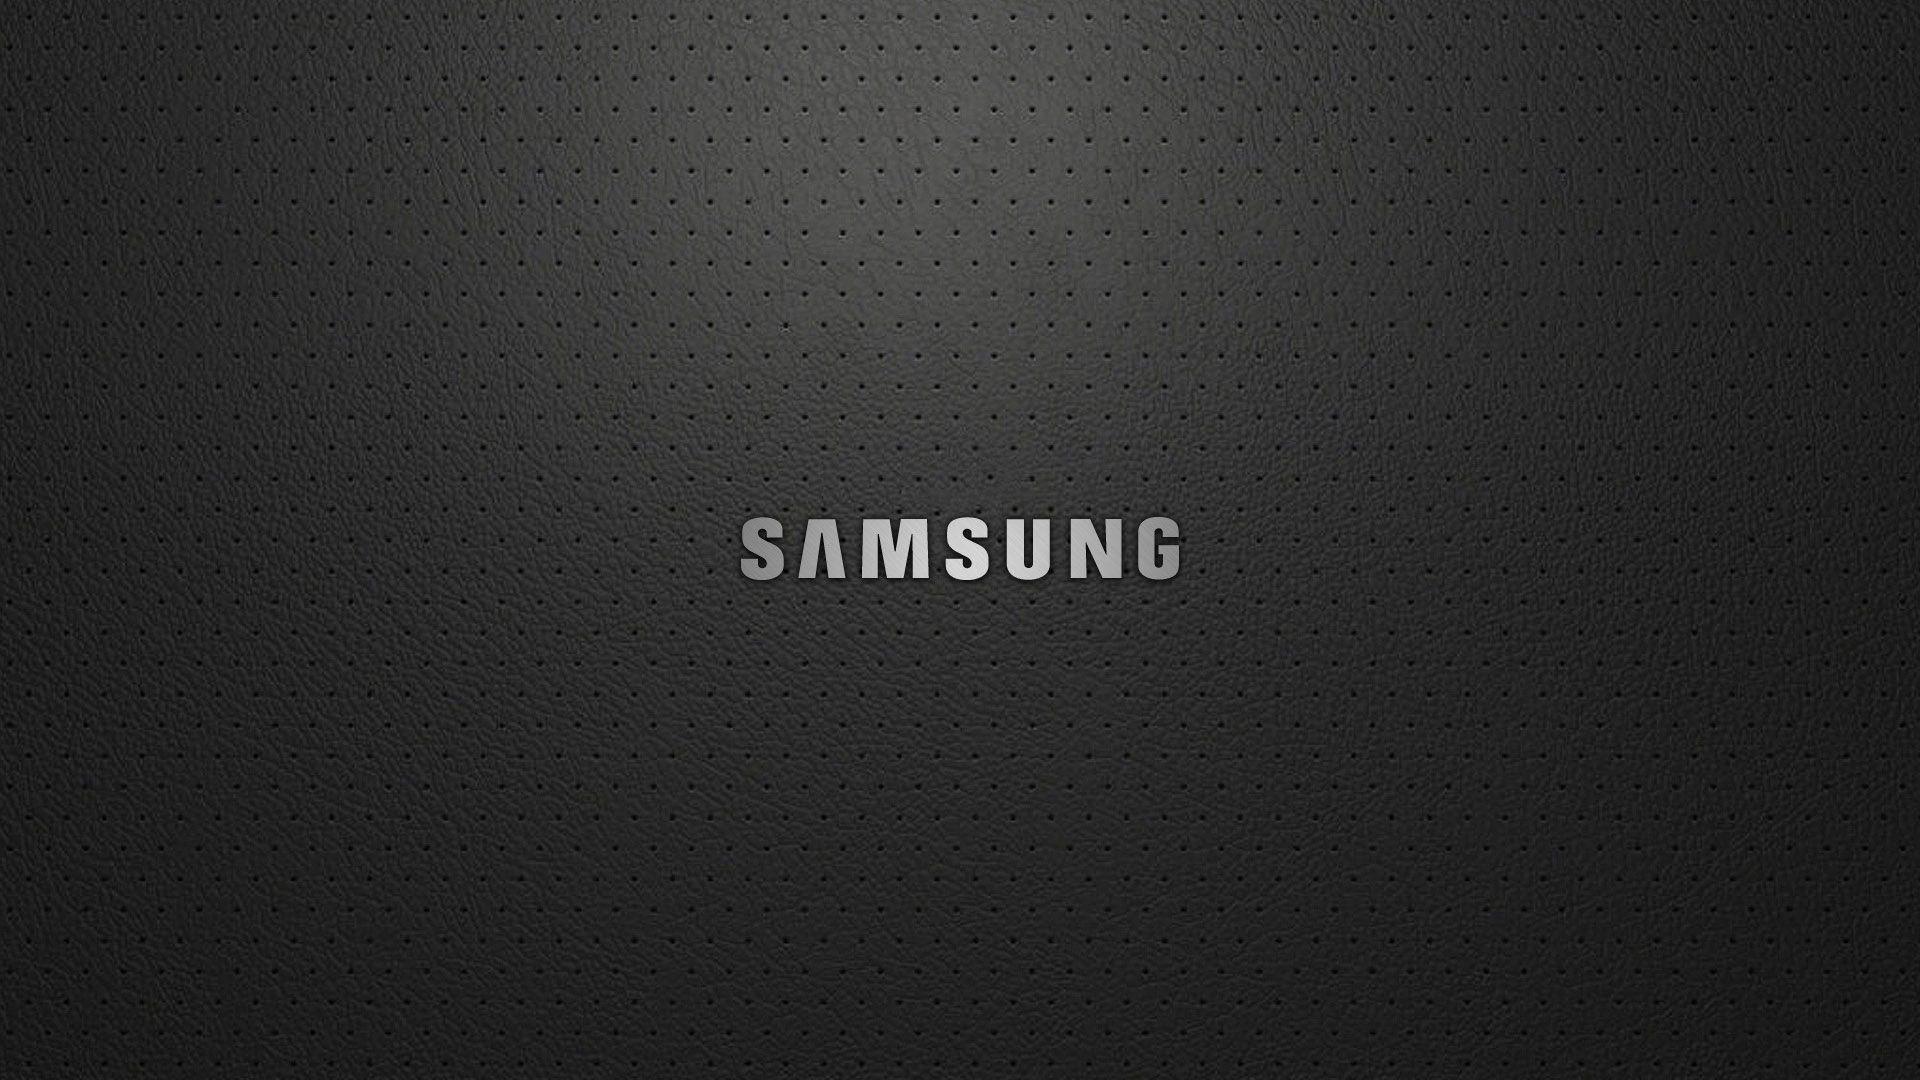 Samsung Mobile Logo - Samsung Logo High Resolution Wallpaper Gadget Central